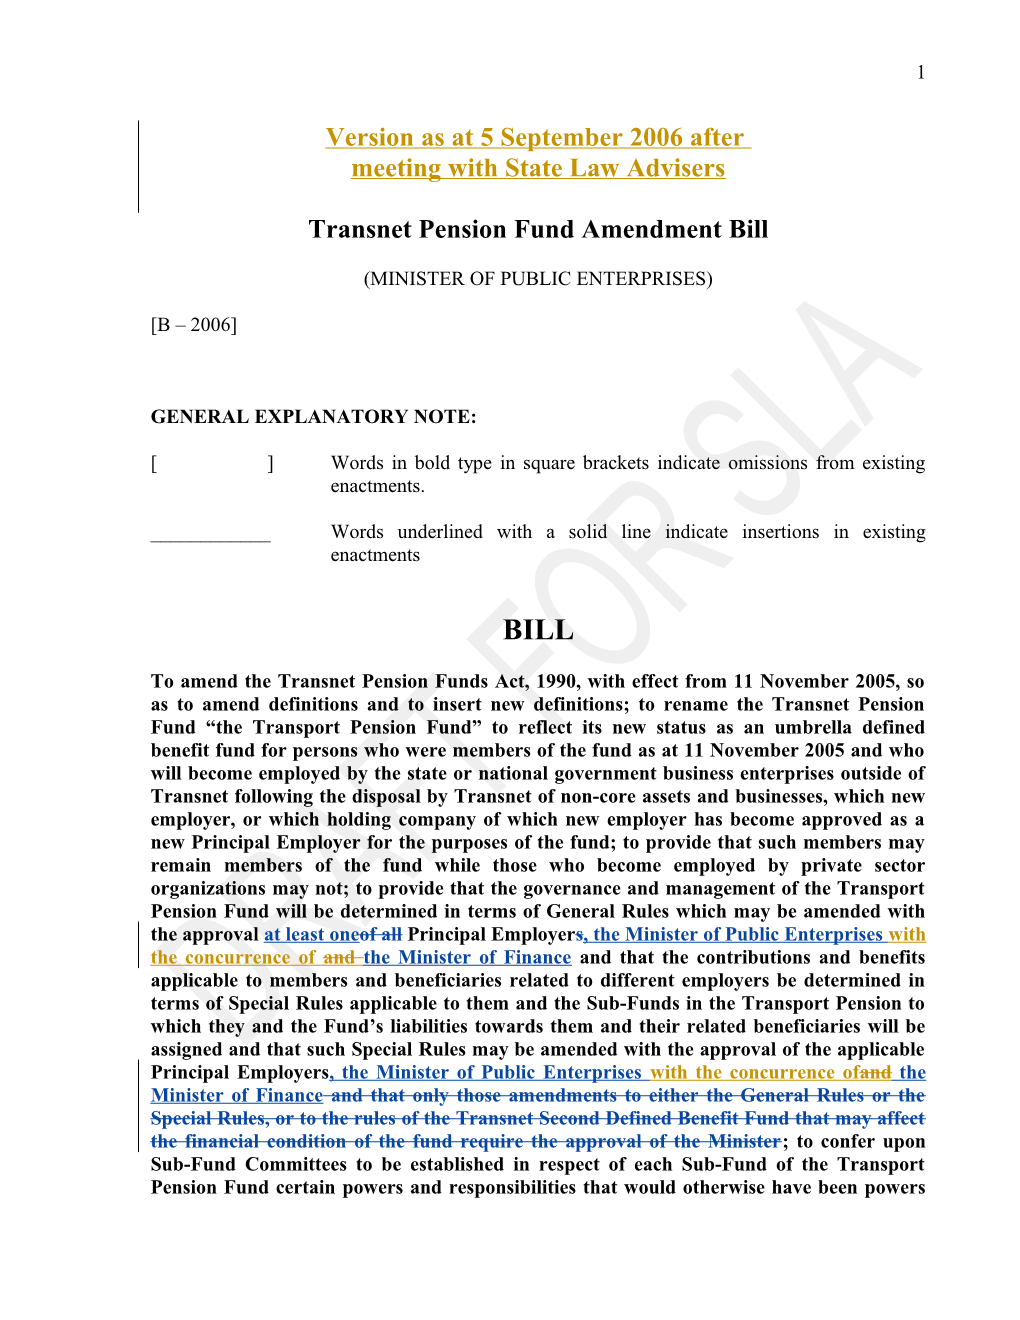 Transnet Pension Fund Amendment Bill